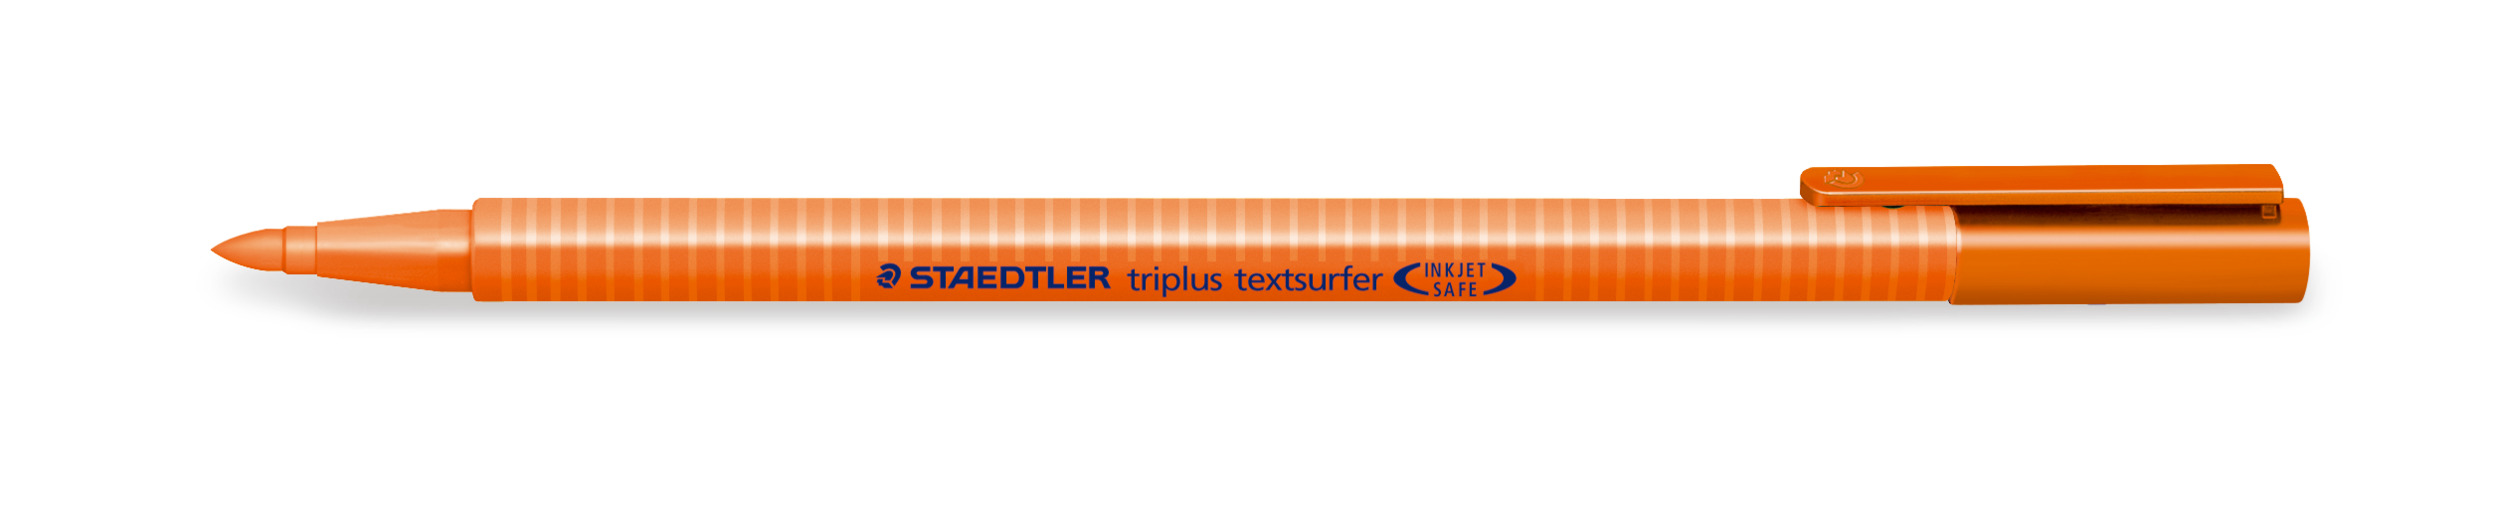 Triplus Textsurfer 362 Markeerstift 1 - 4 mm Oranje